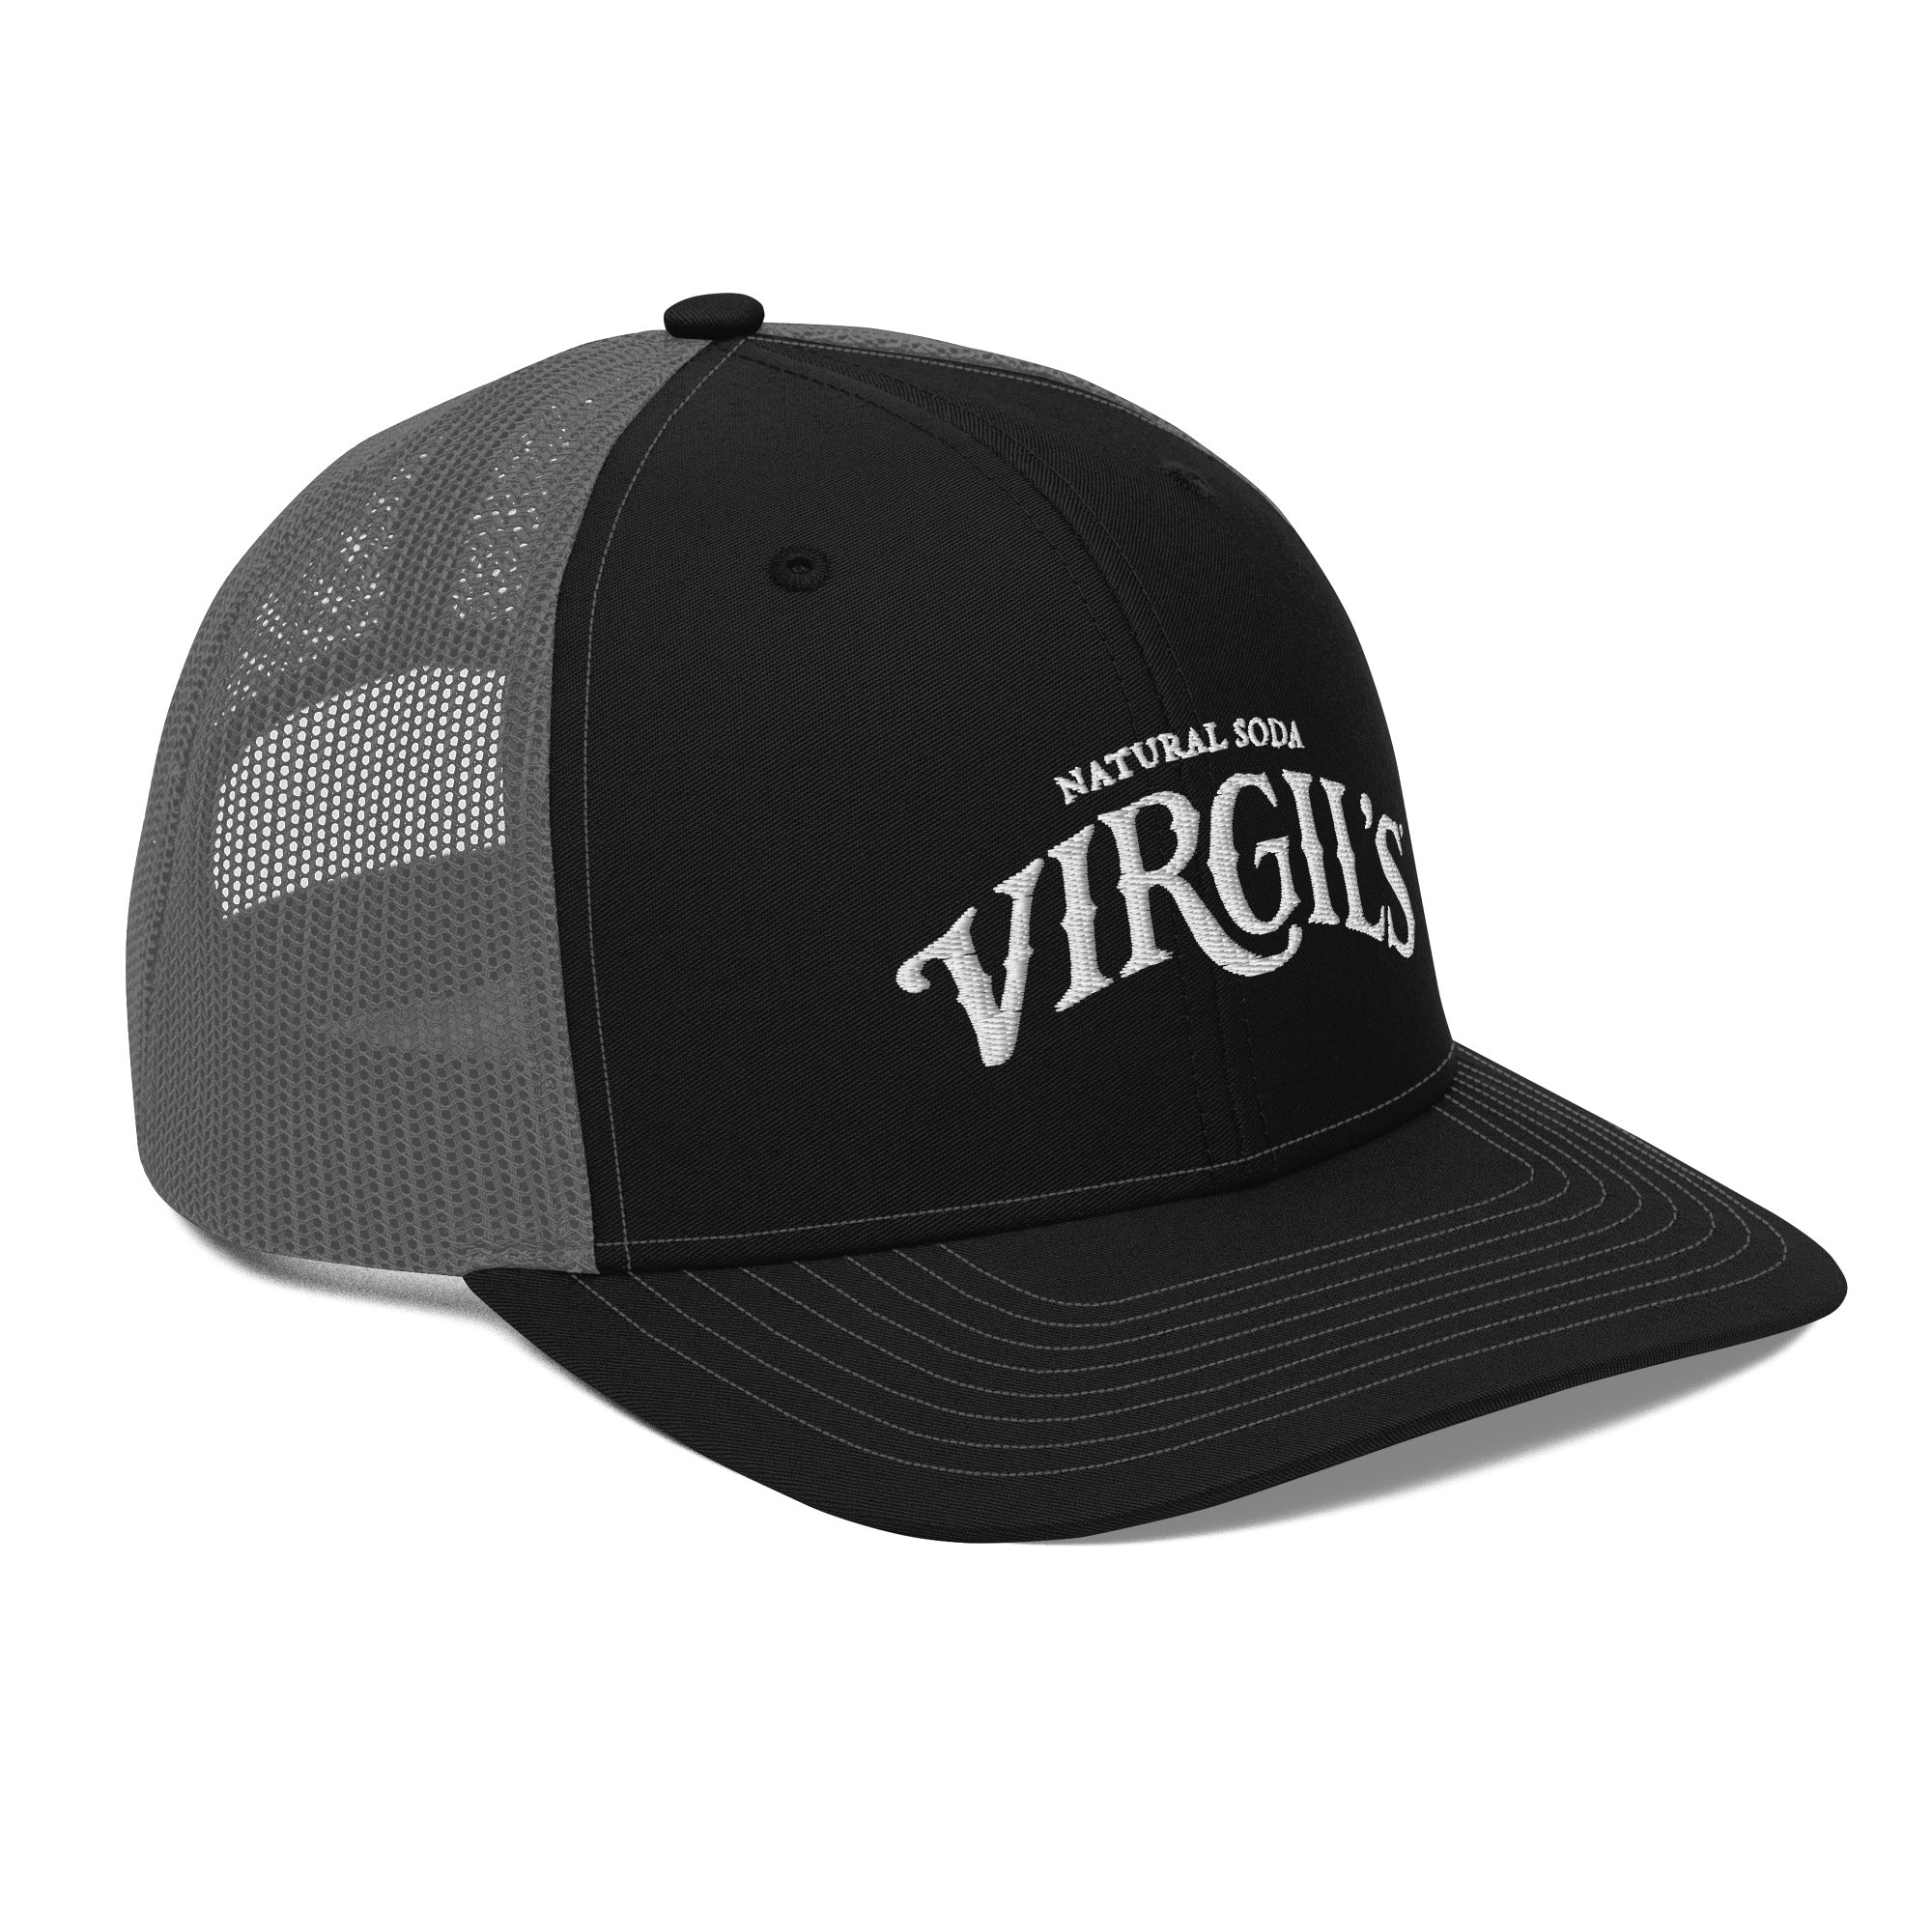 Virgil's Black & Grey Trucker Cap - Reed'sInc